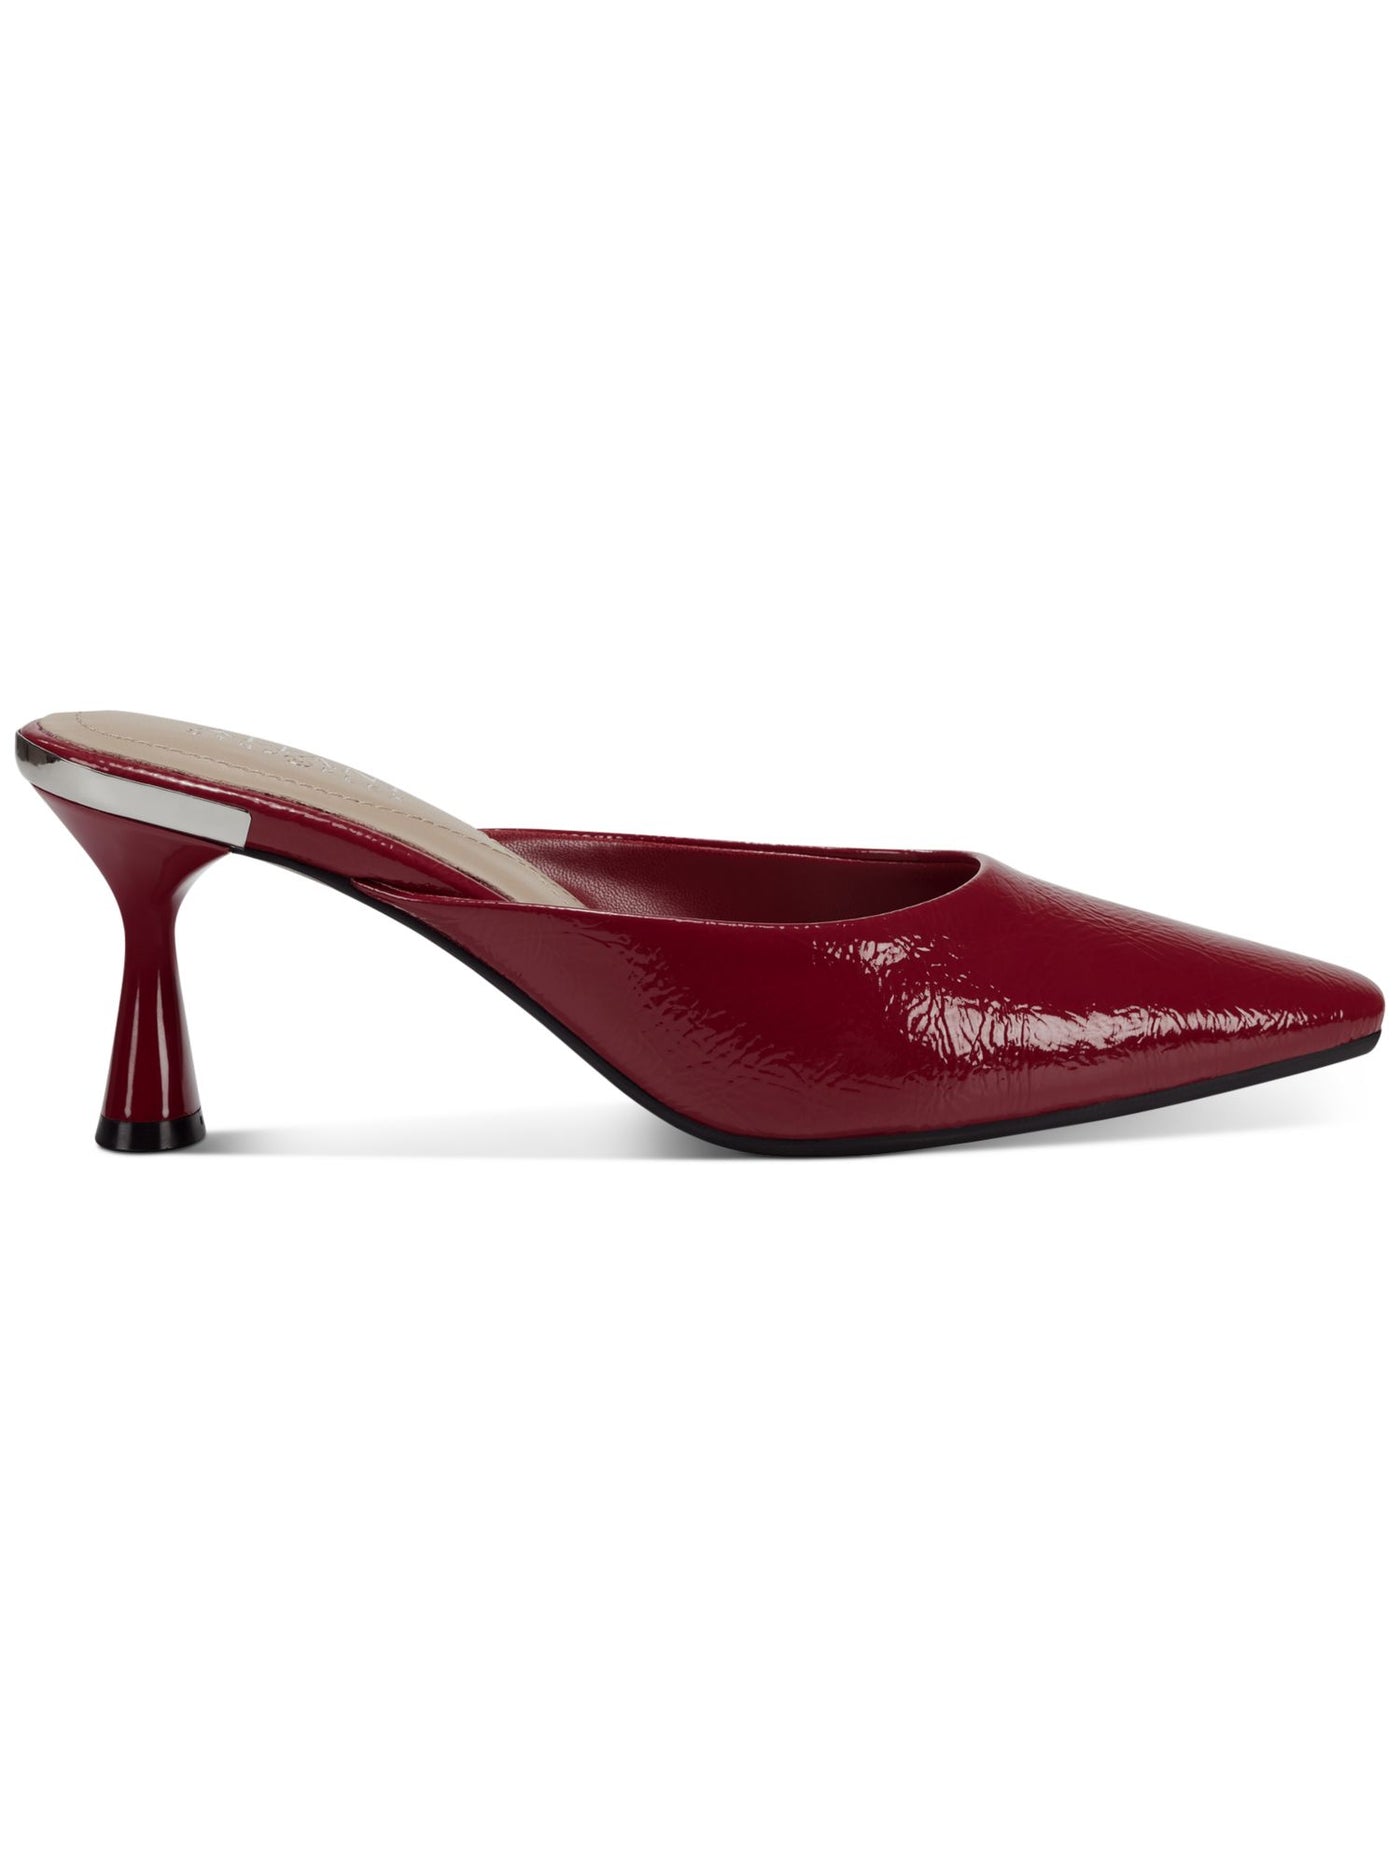 ALFANI Womens Red Crinkle Comfort Cecilia Square Toe Flare Slip On Heeled Mules Shoes 6.5 M